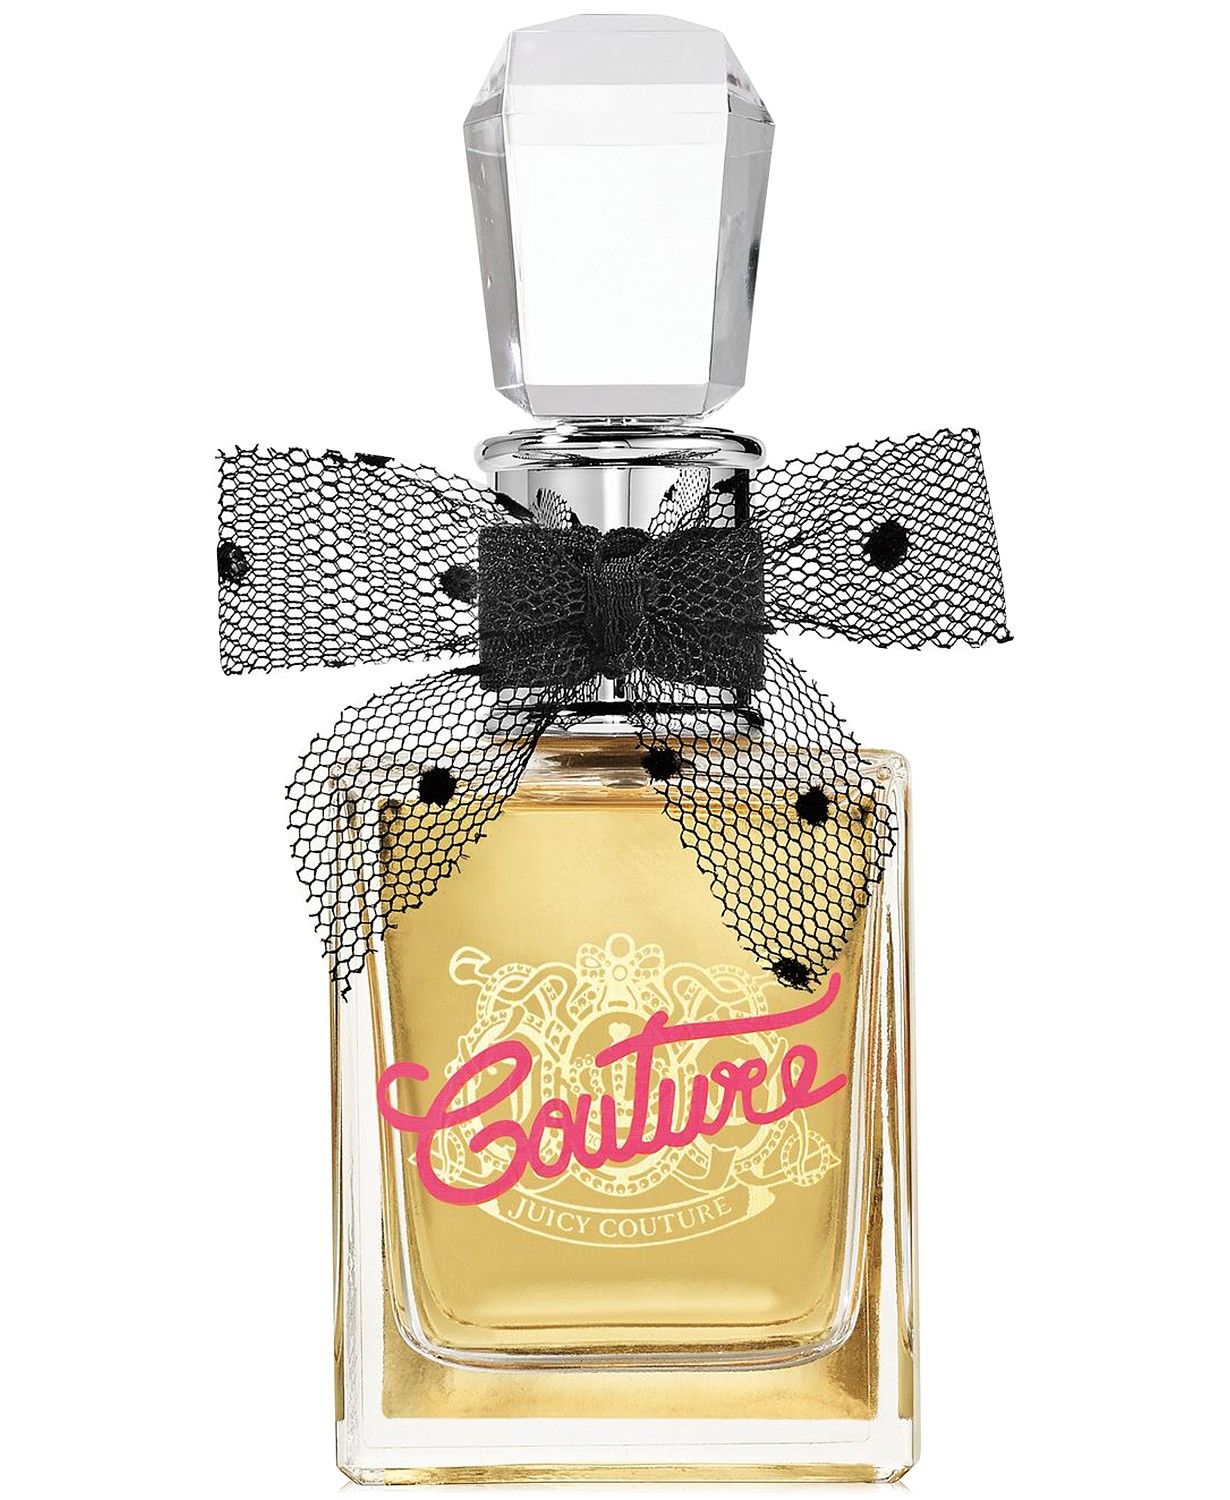 1 oz, Viva La Juicy Gold Couture Eau de Parfum Spray -$29 (50% Off)